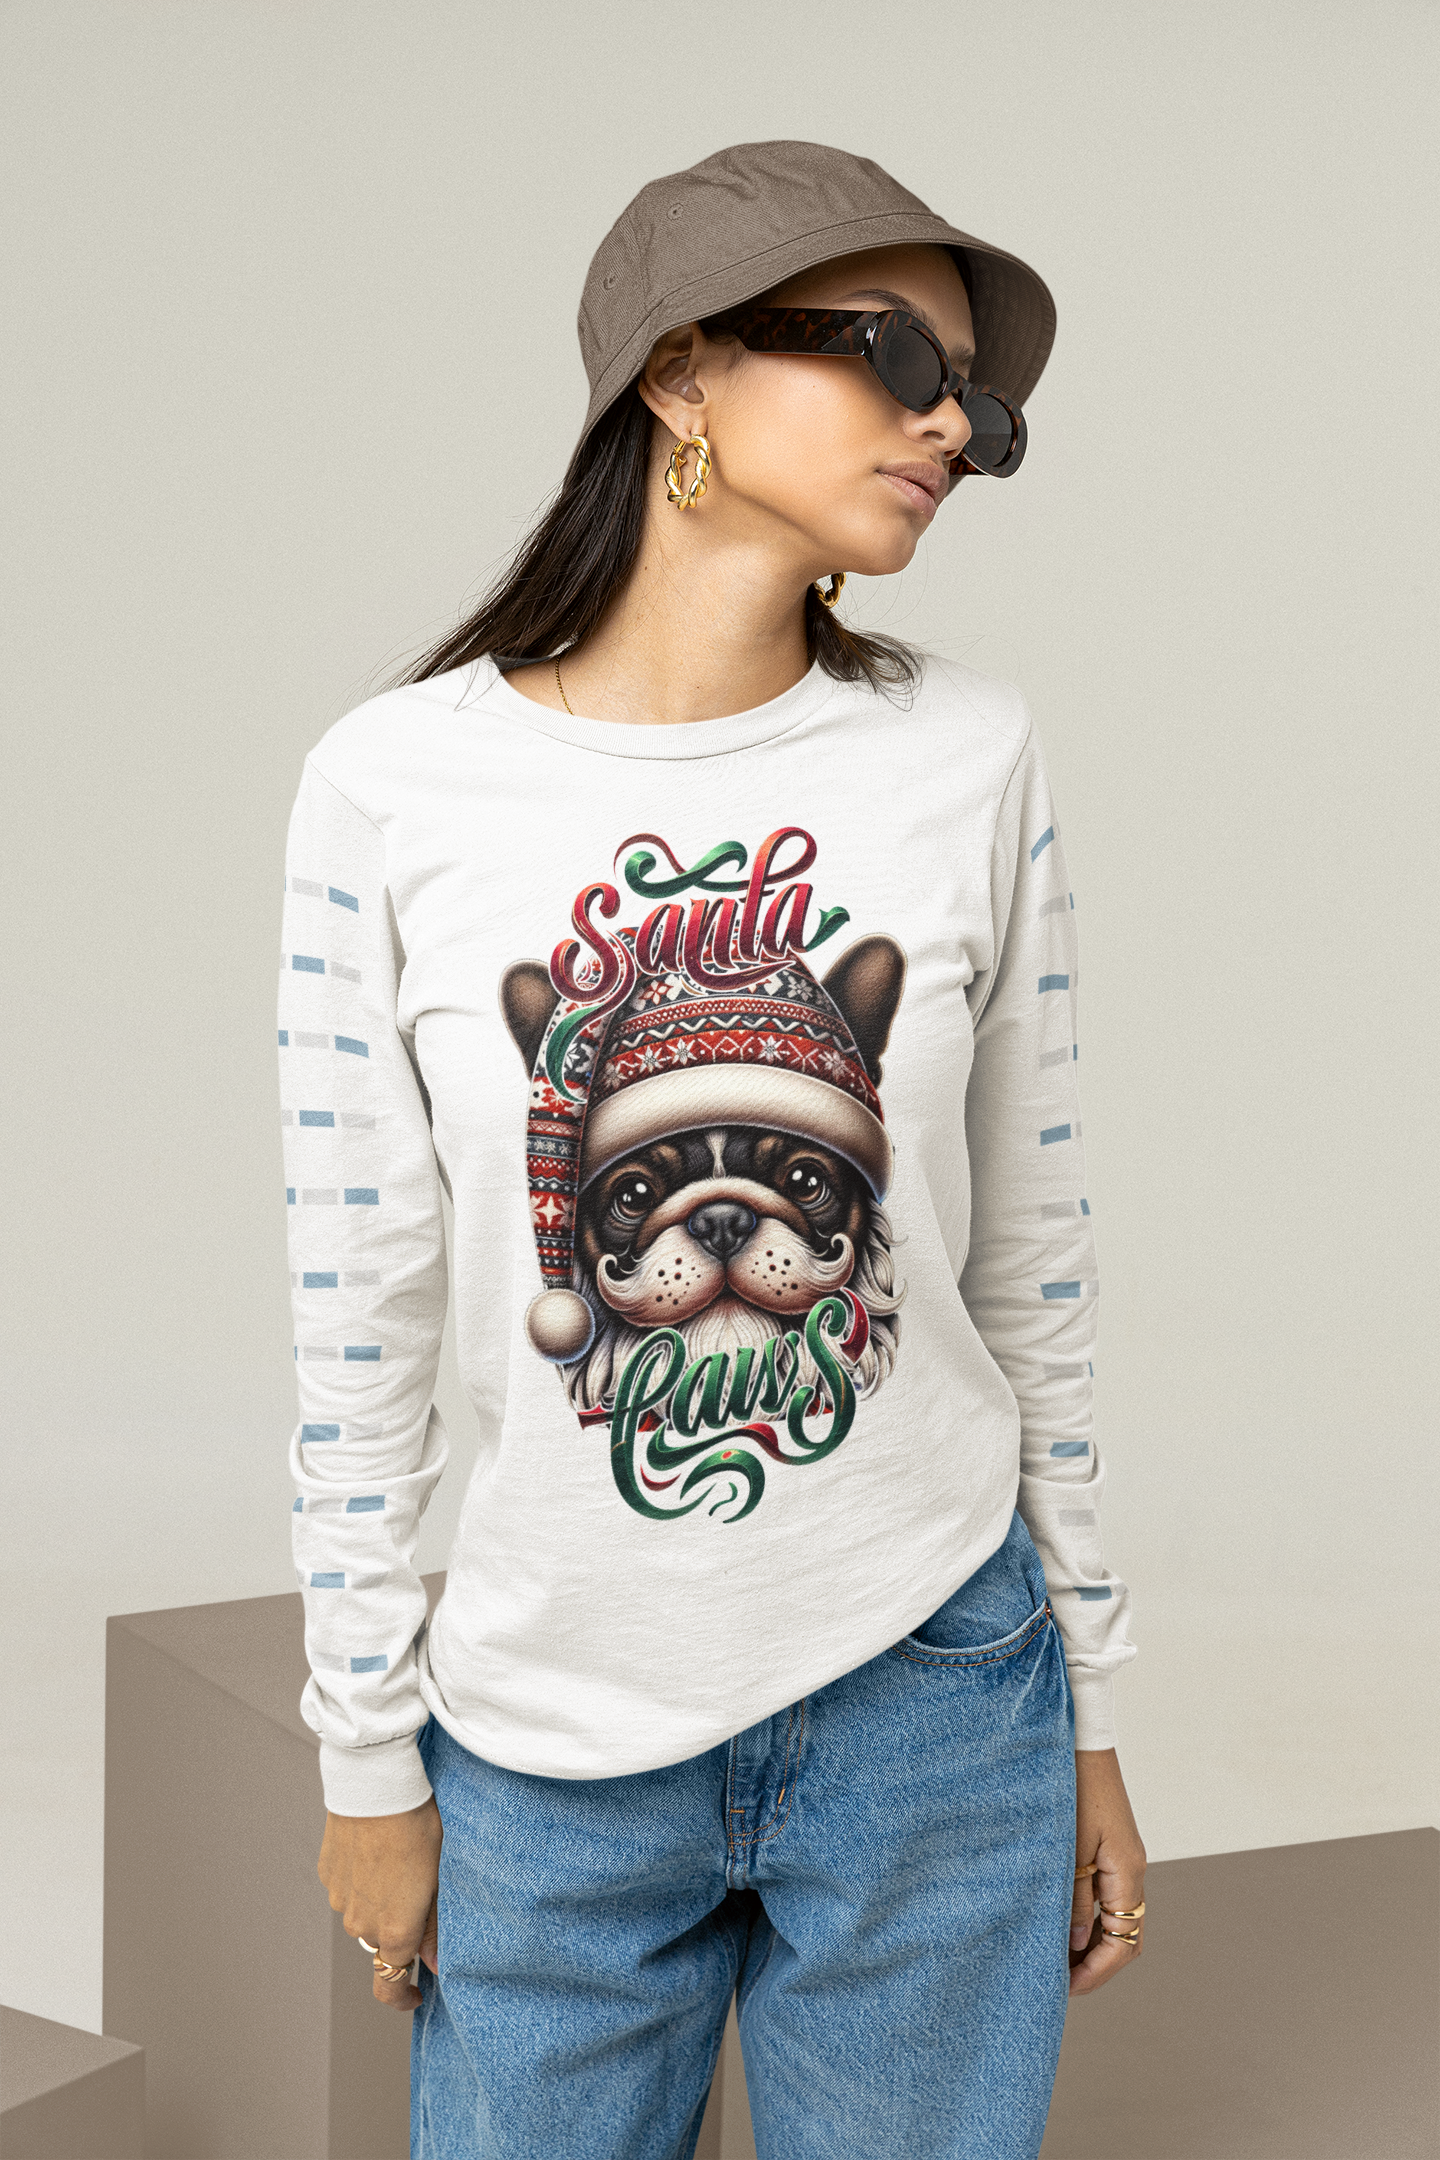 Santa Paws Long Sleeve Tee -Boxer Design - 100% Cotton - USA Made - Holiday Party Favorites